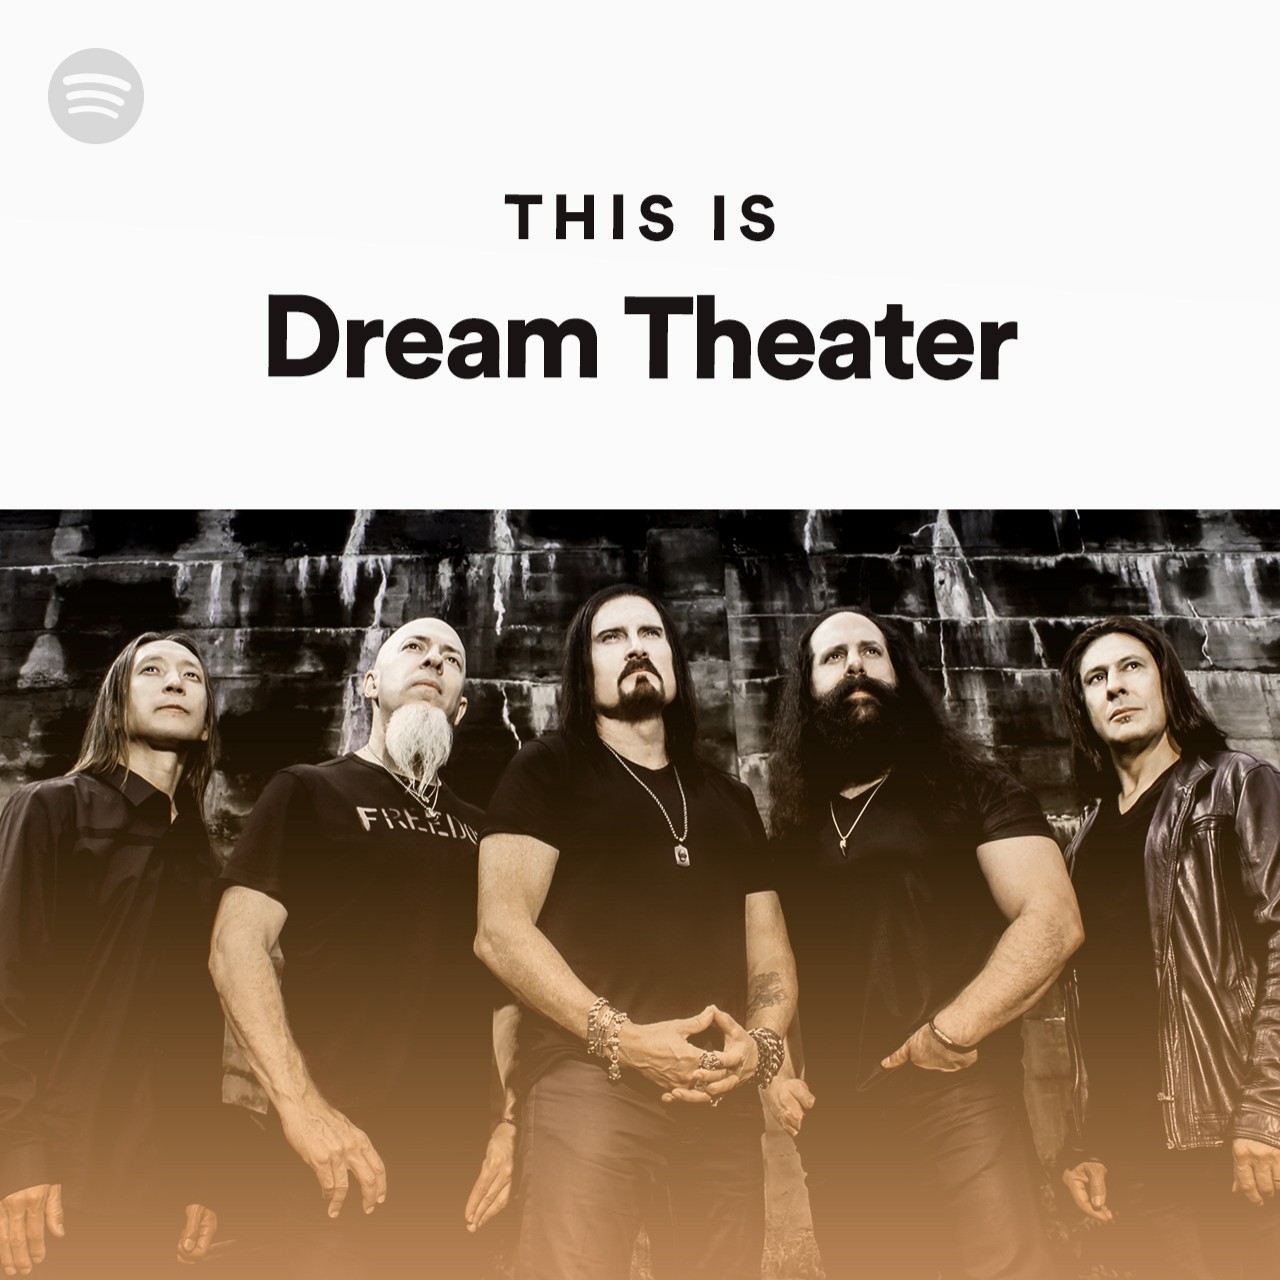 Theater песня. Dream Theater Band. Dream Theater memes. Dream Theater Pony. Dream Theater made in Japan photo.